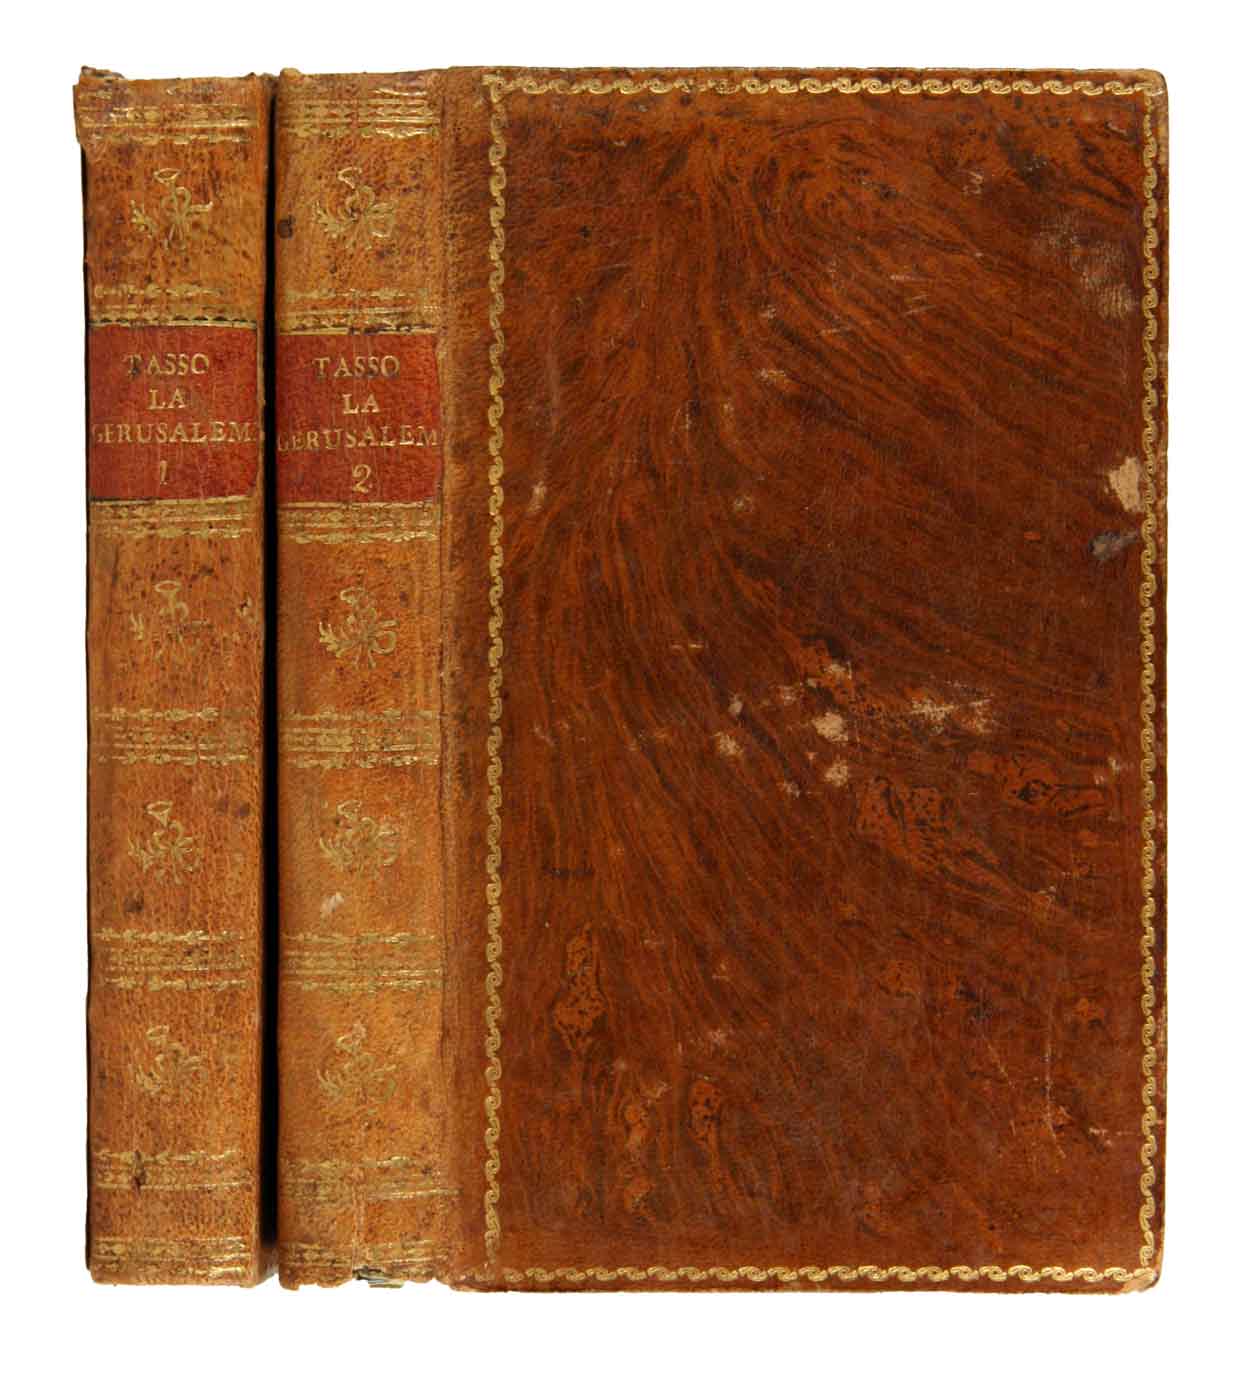 TASSO, Torquato (1544-1595): - La Gerusalemme liberata. In 2 volumi.